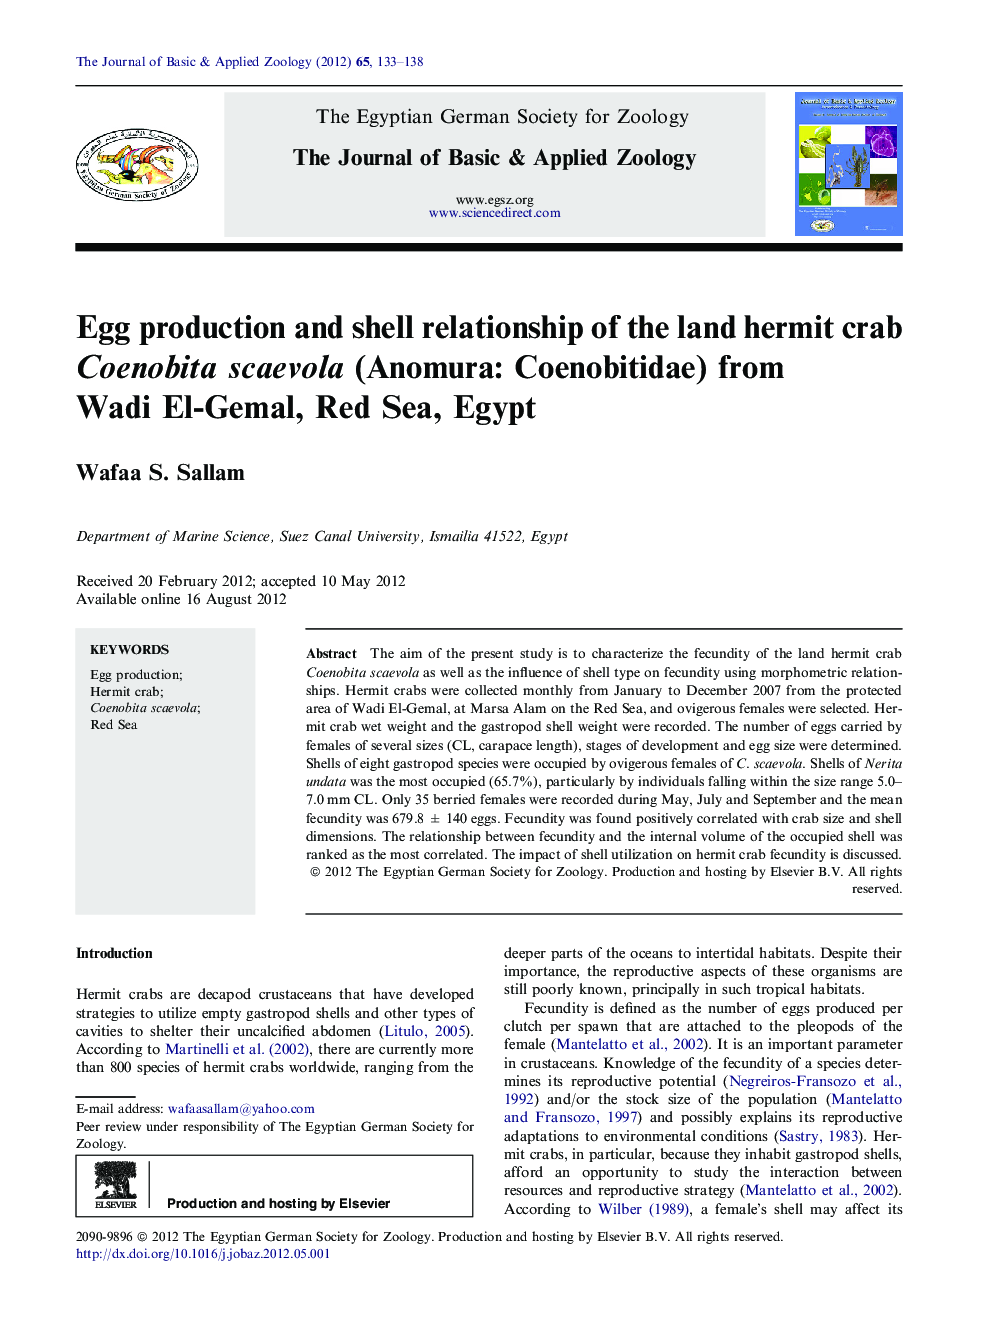 Egg production and shell relationship of the land hermit crab Coenobita scaevola (Anomura: Coenobitidae) from Wadi El-Gemal, Red Sea, Egypt 